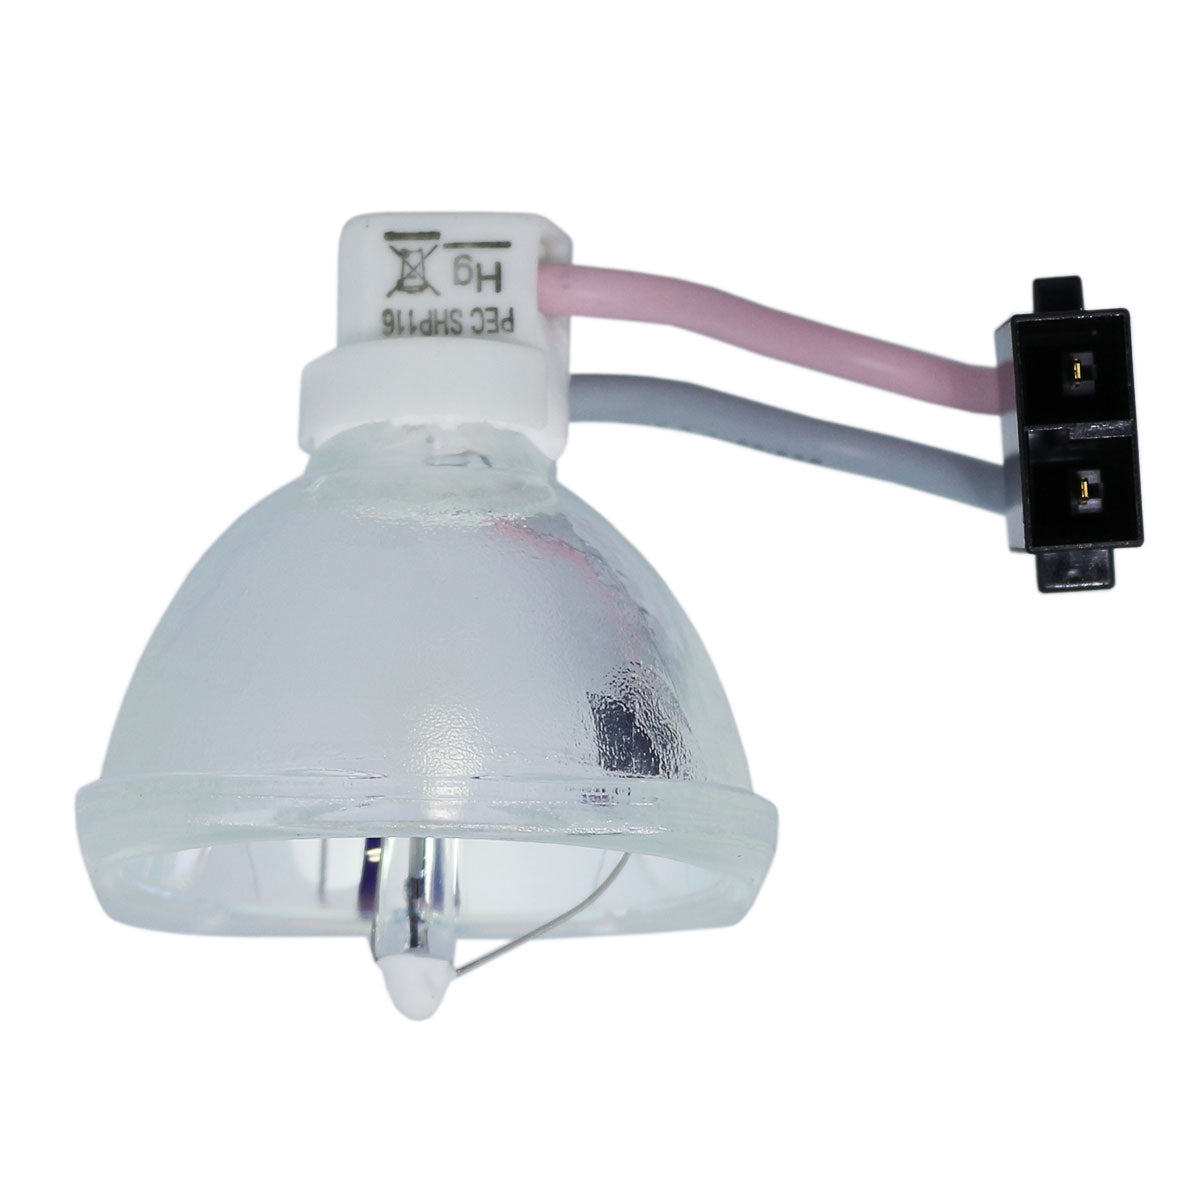 Taxan KG-LPS2230 Phoenix Projector Bare Lamp